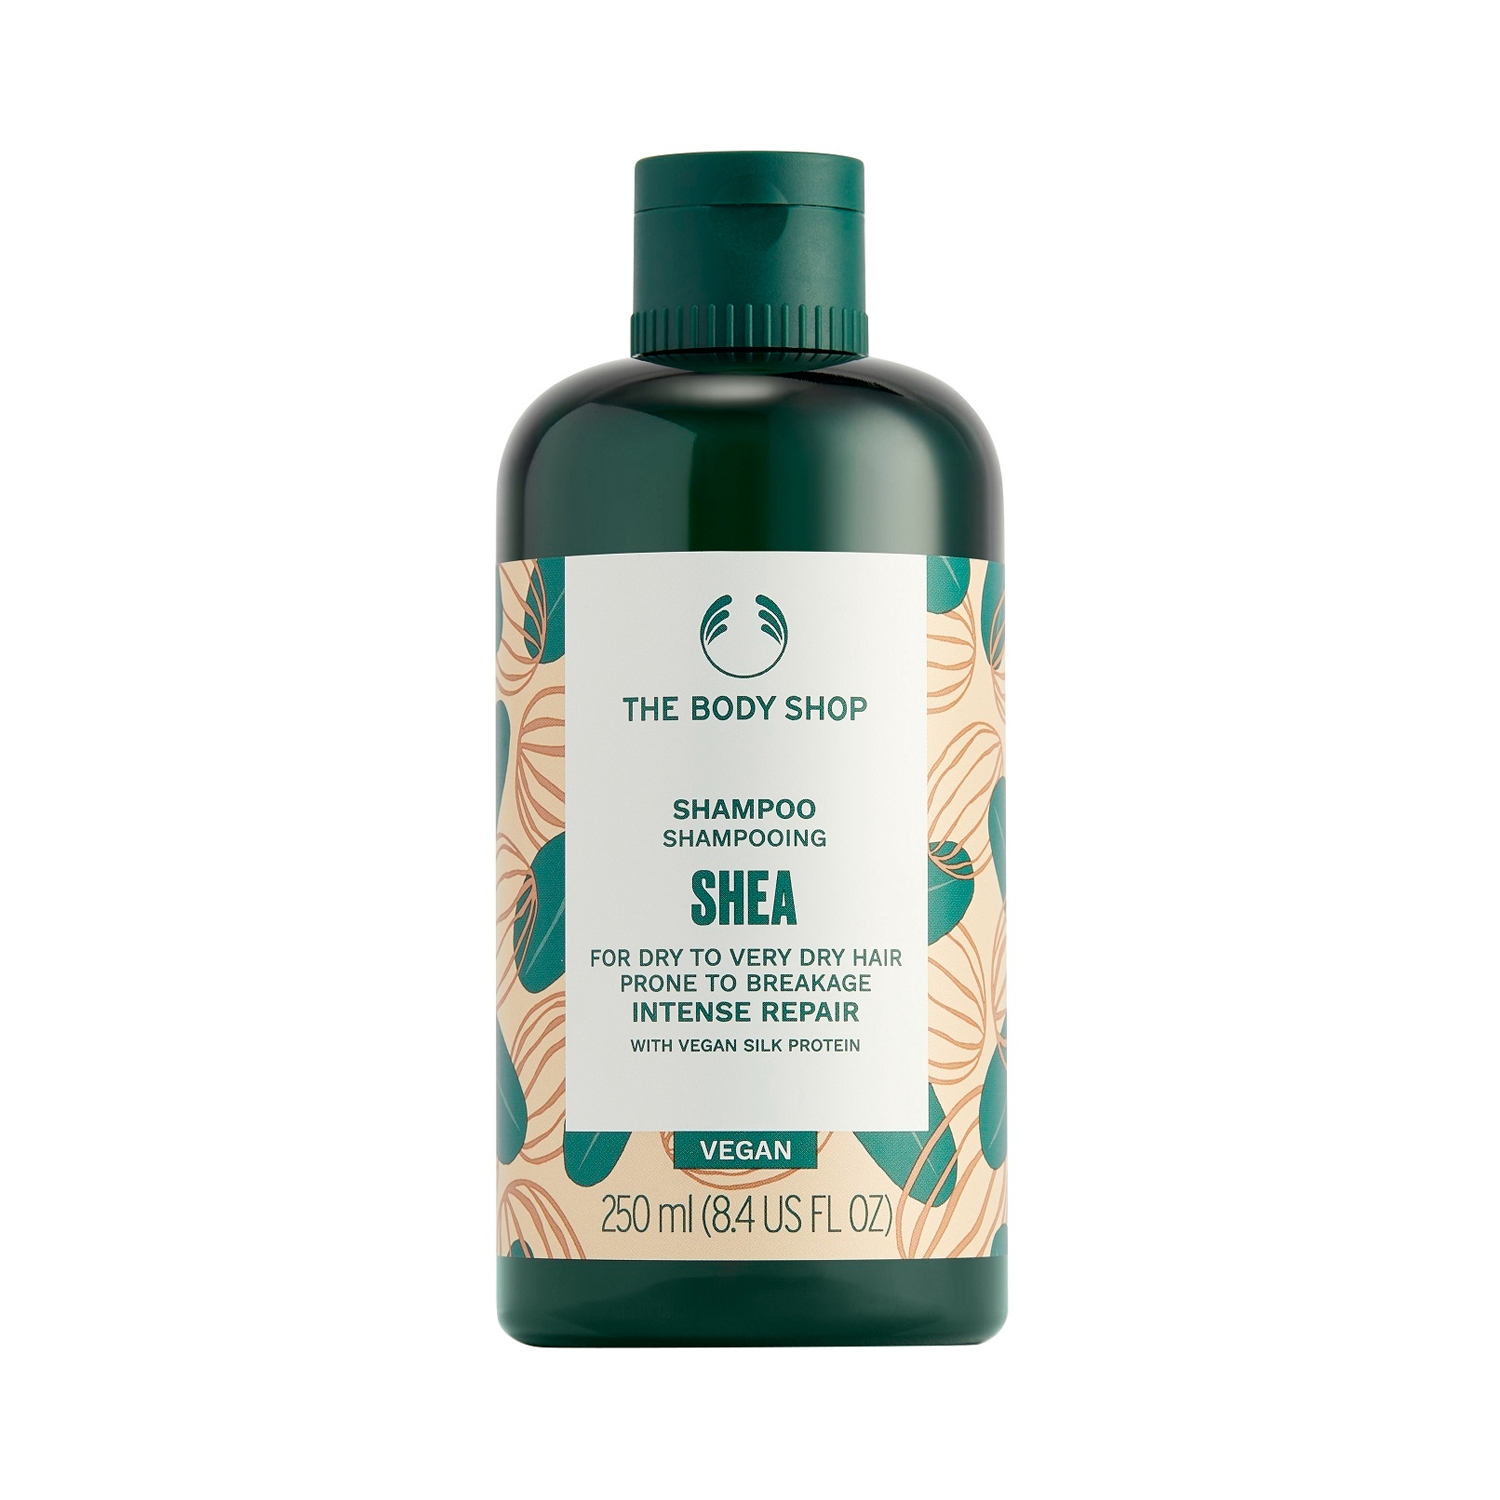 The Body Shop | The Body Shop Shea Intense Repair Shampoo (250ml)